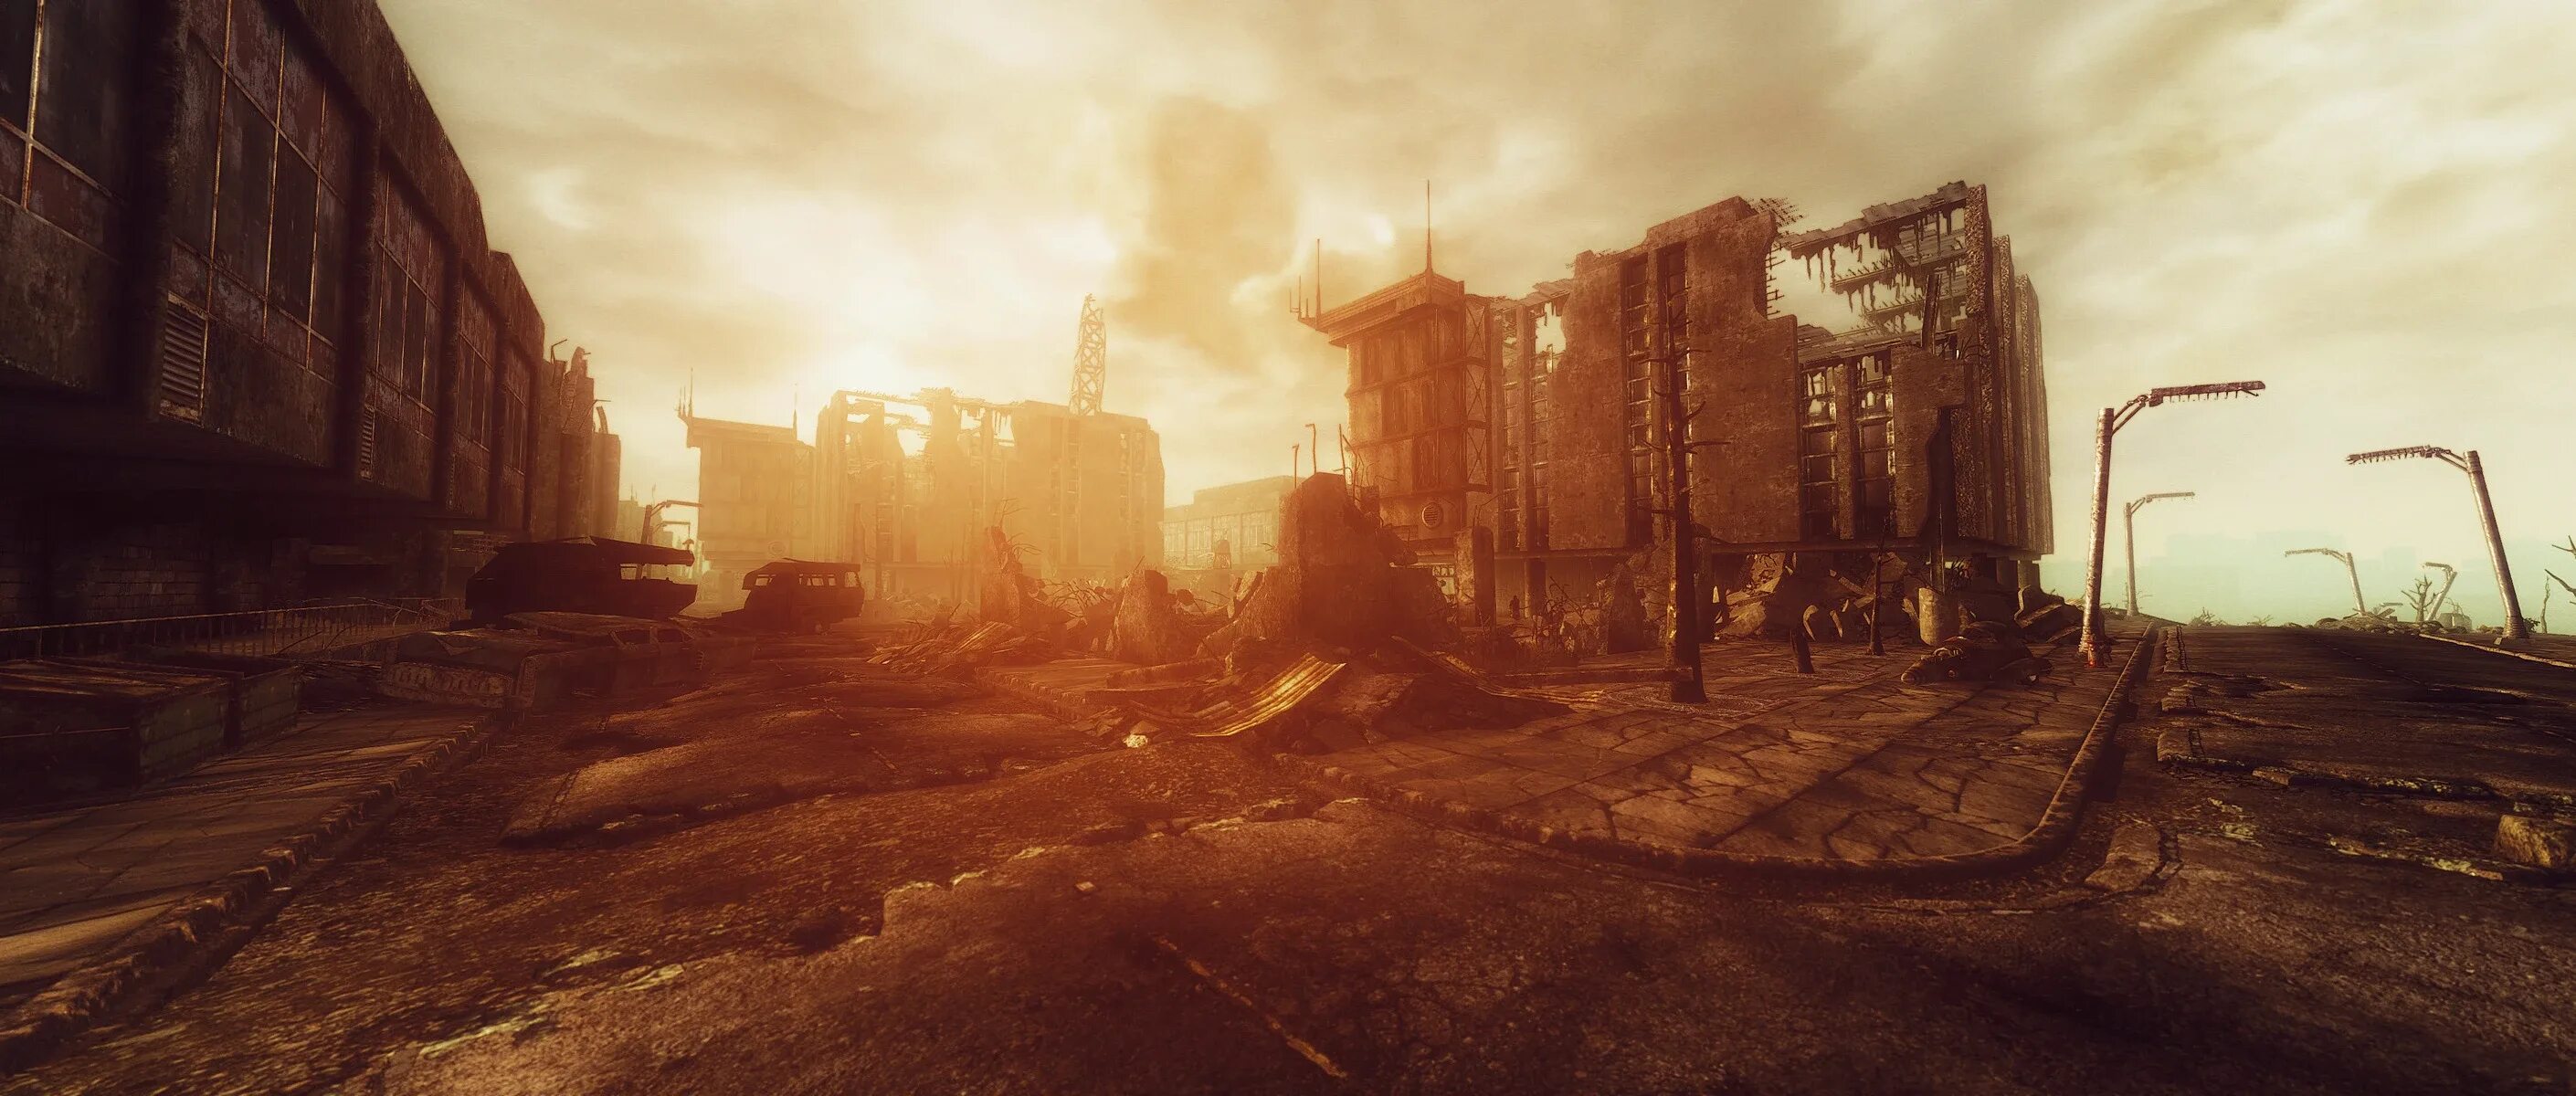 Fallout new enb. Fallout 3. Fallout Пустошь. Фоллаут 3 фон. Fallout 3 ENB Apocalypse.